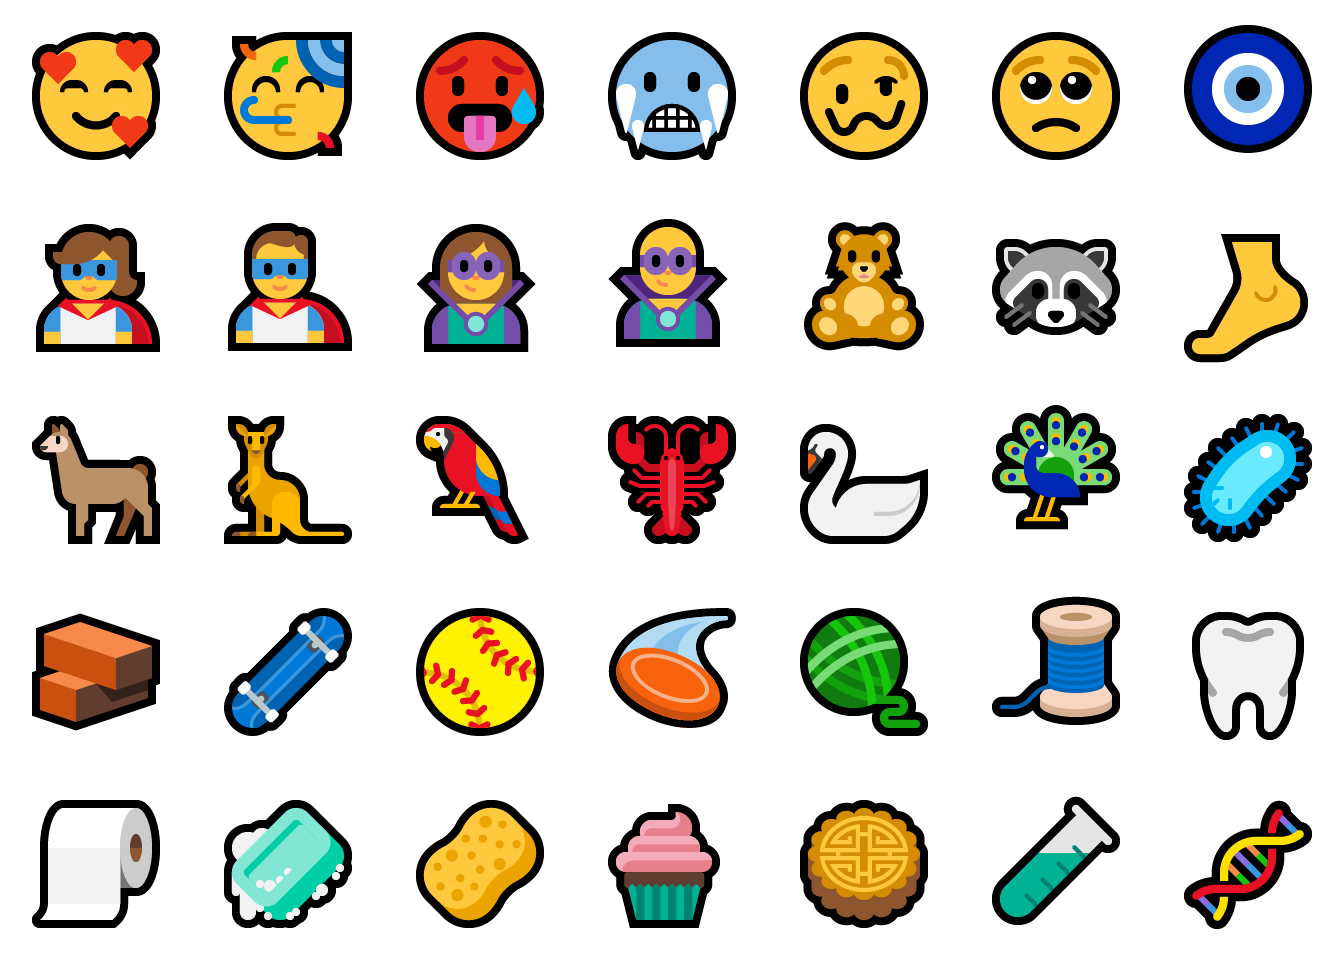 New emojis.